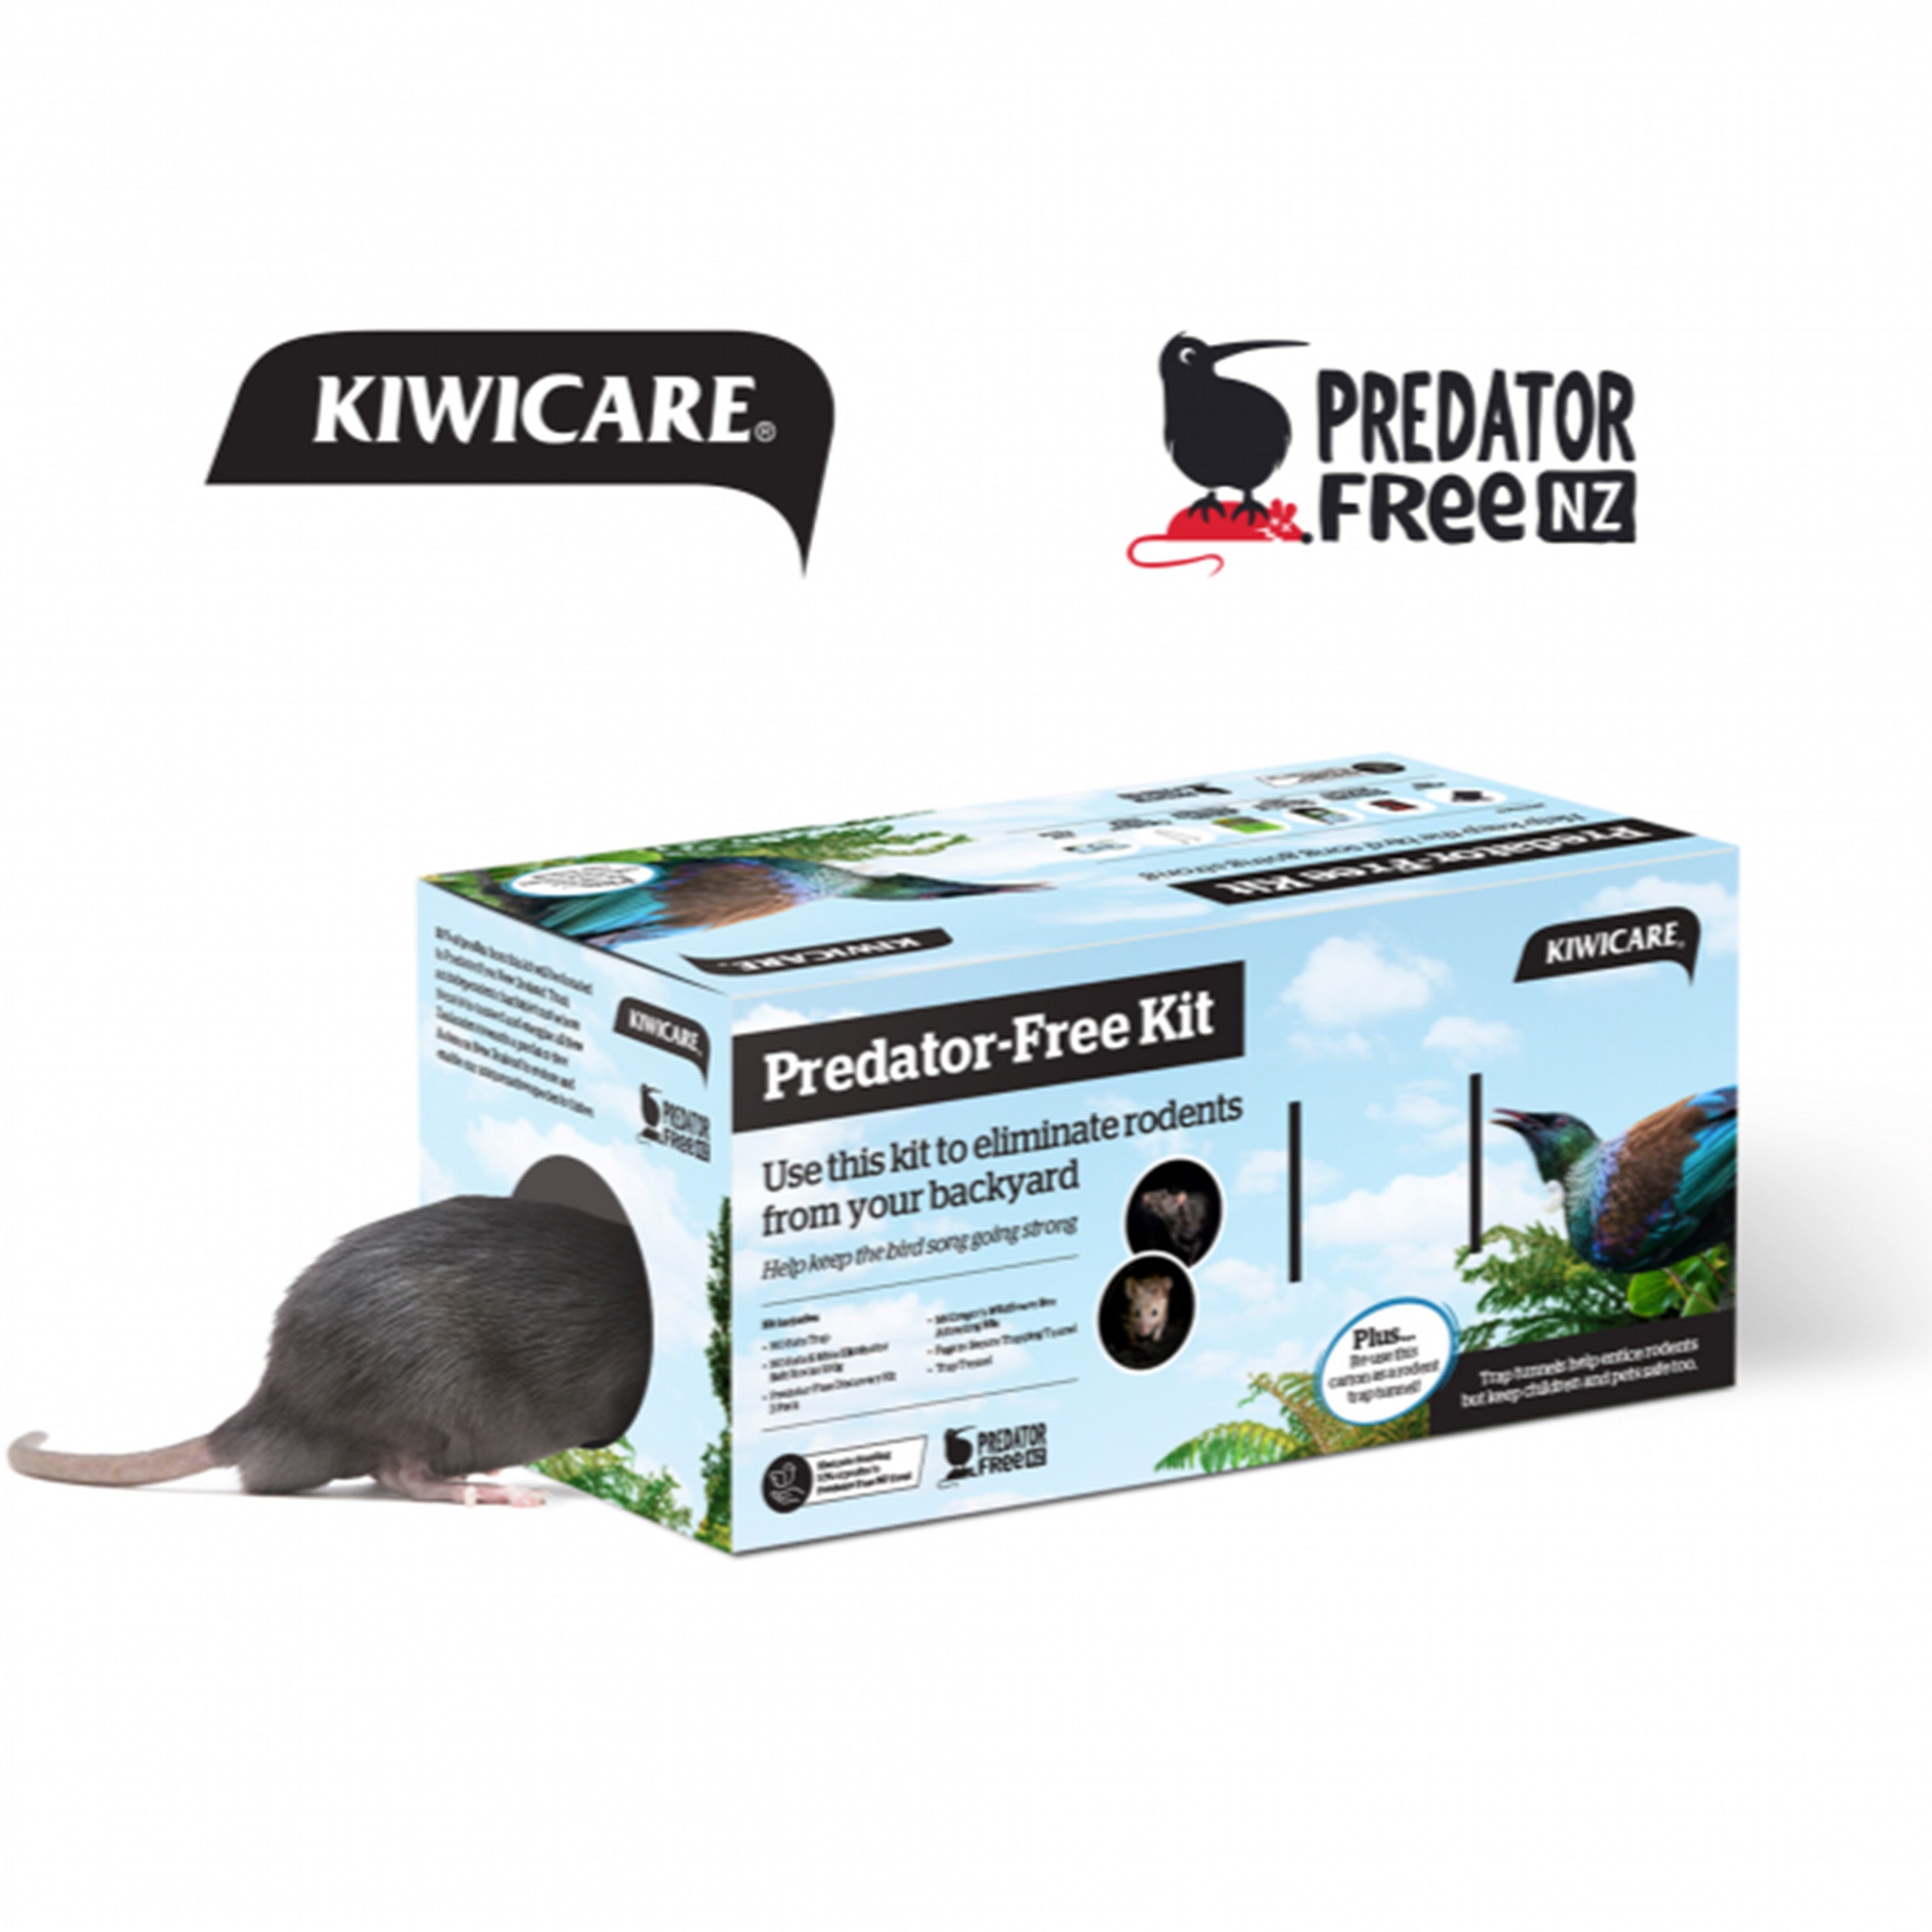 Kiwicare Predator-Free Kit 2.0